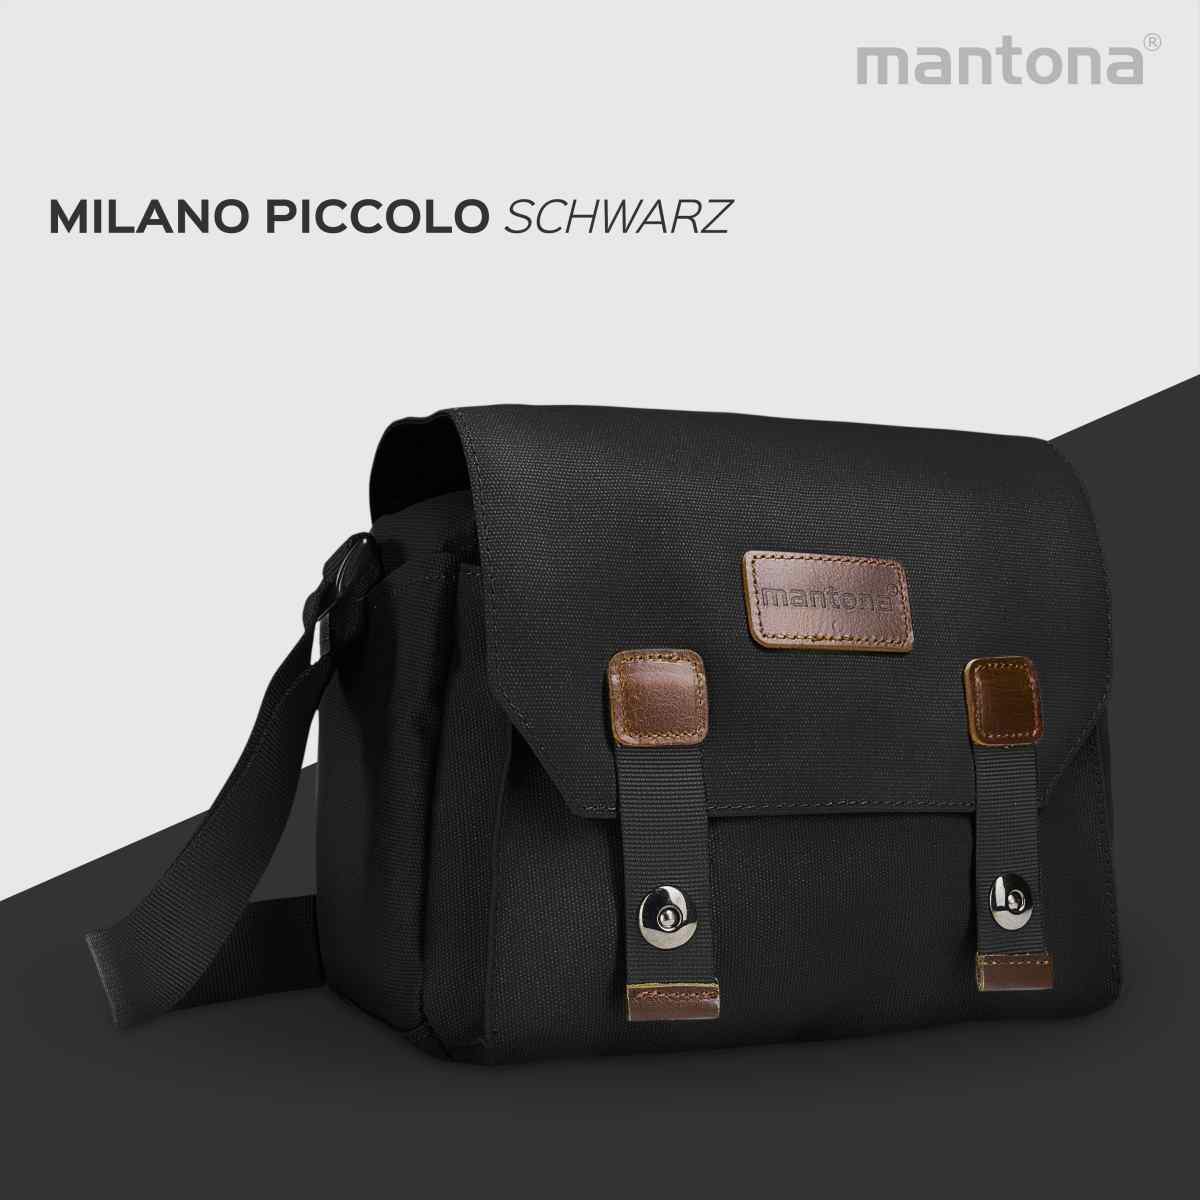 Mantona Camerabag Milano piccolo black